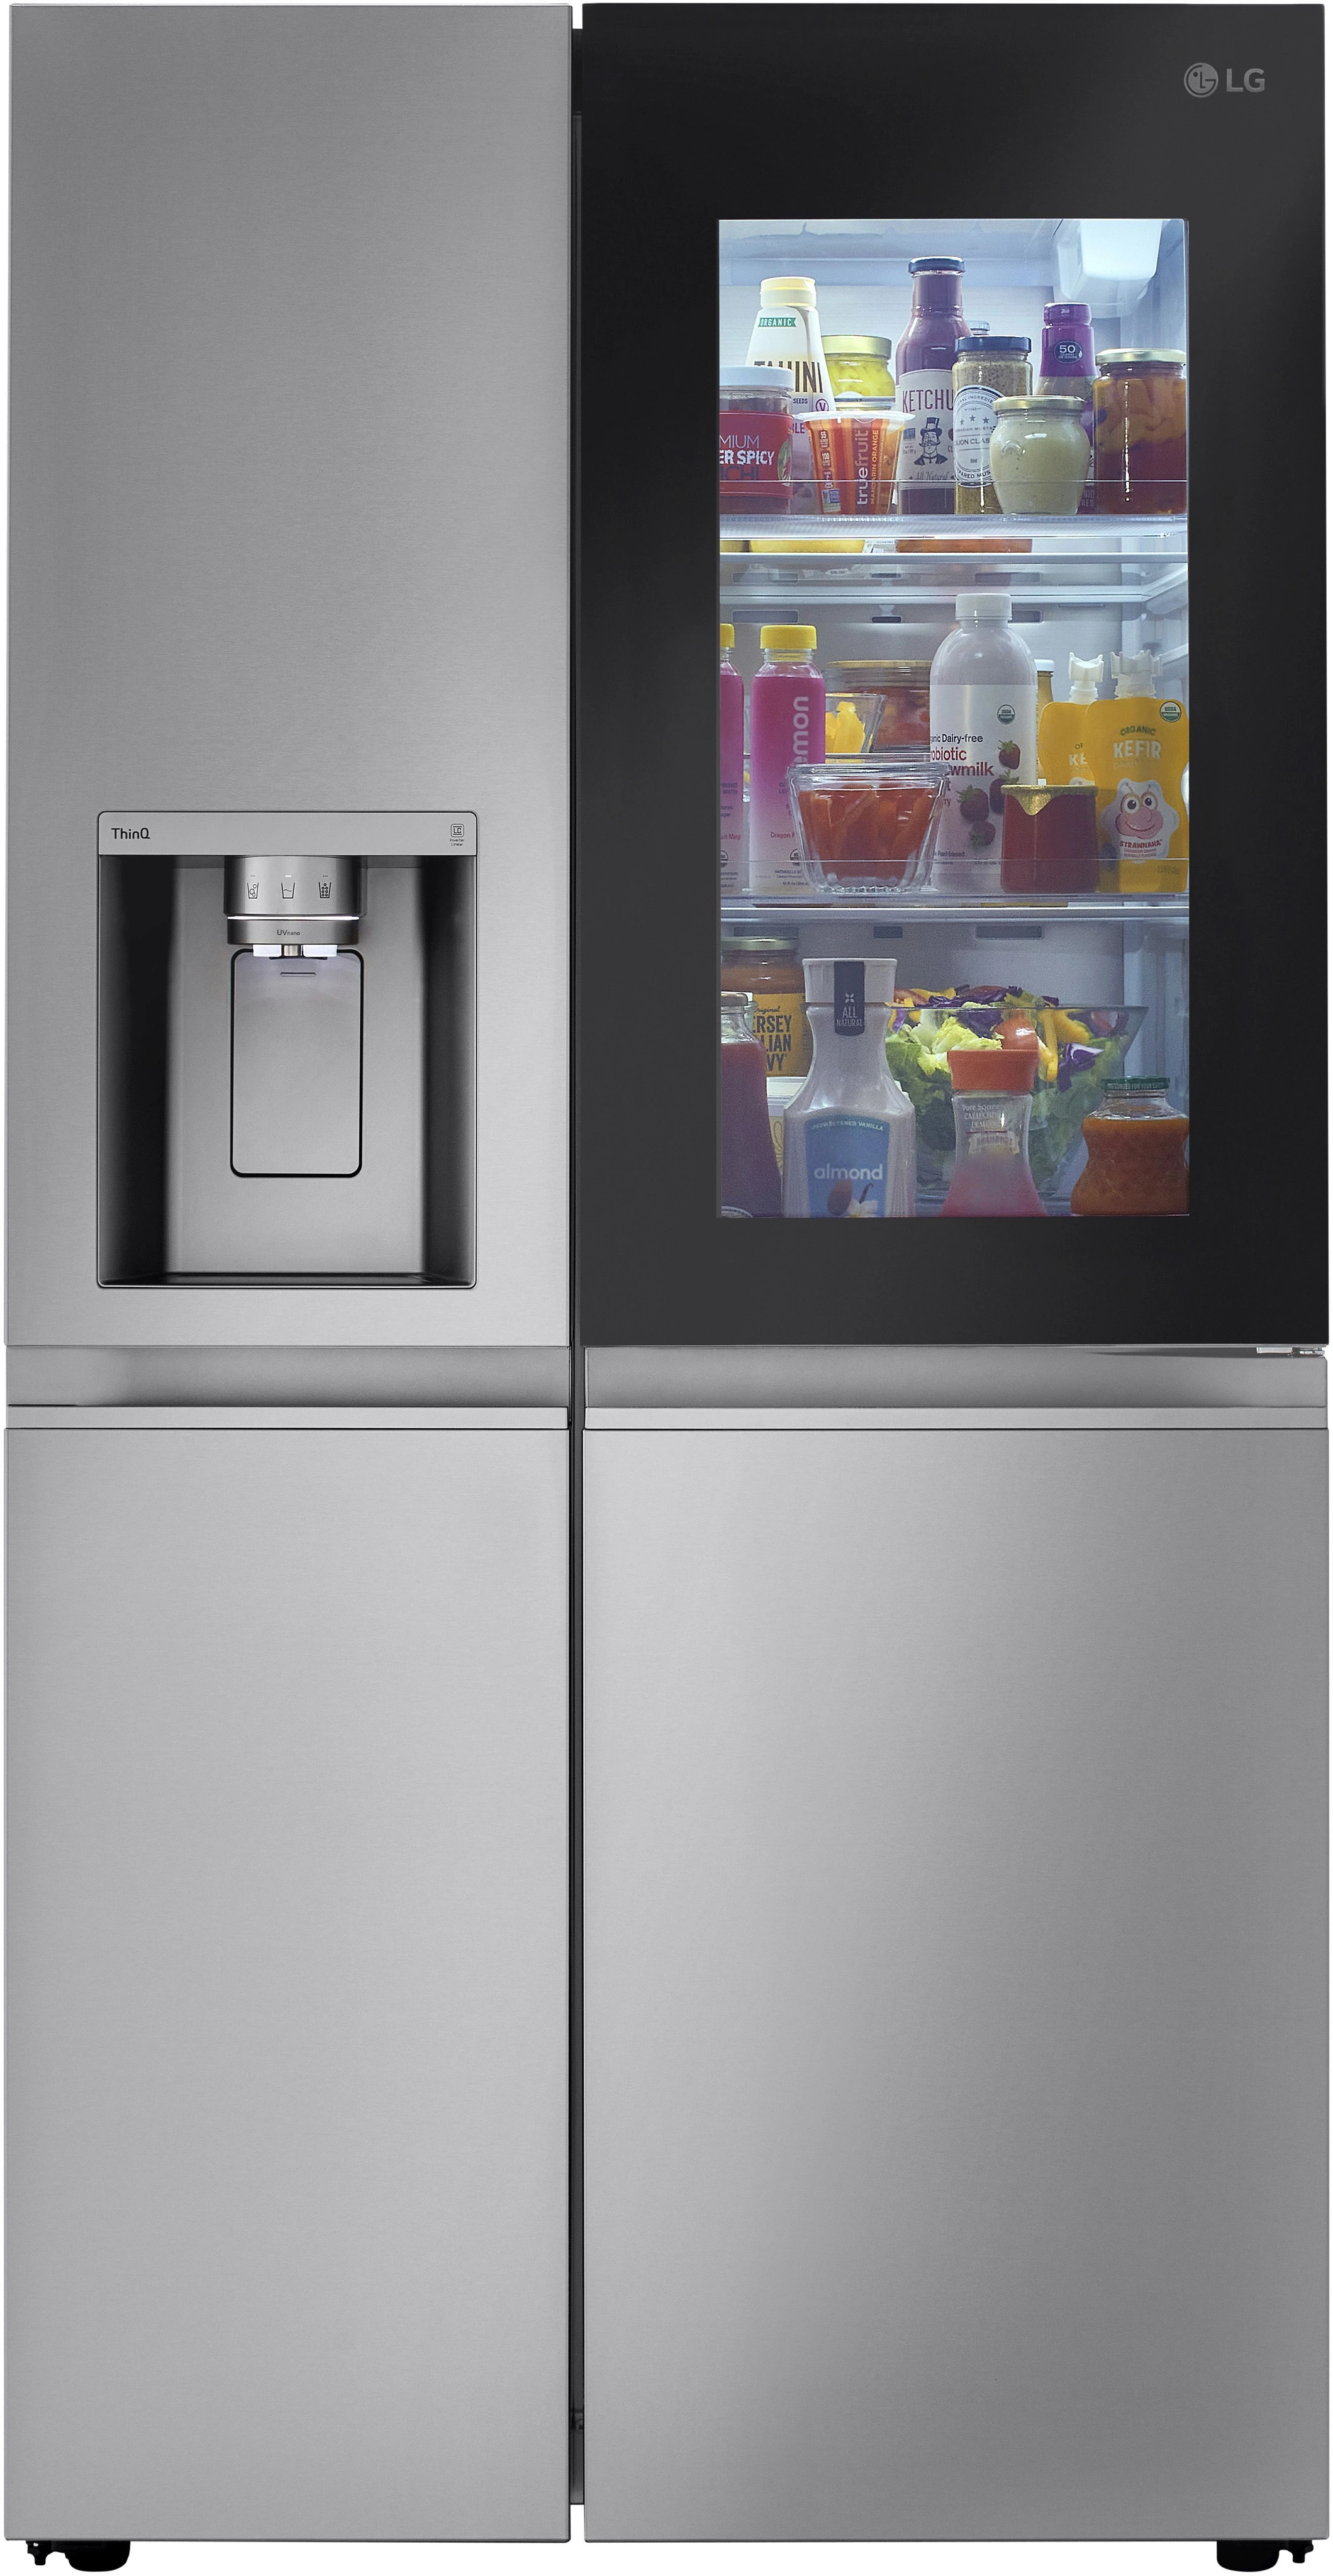 LG VS Samsung Refrigerator How Do They Compare? Don's Appliances